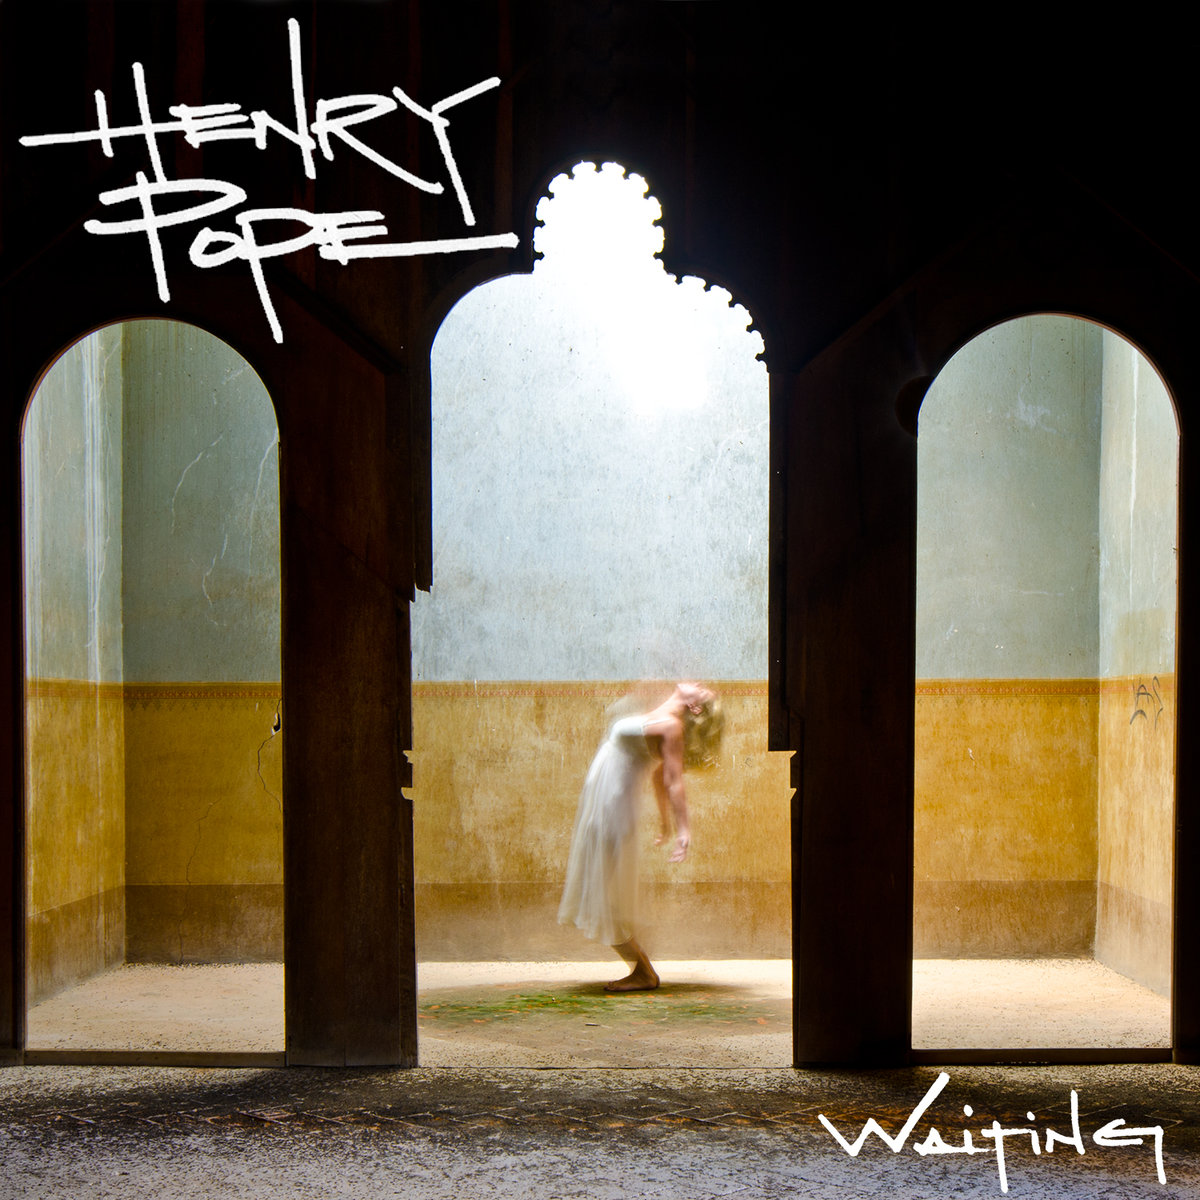 Henry Pope - DMV Nails @ 'Waiting' album (bass, electronic)